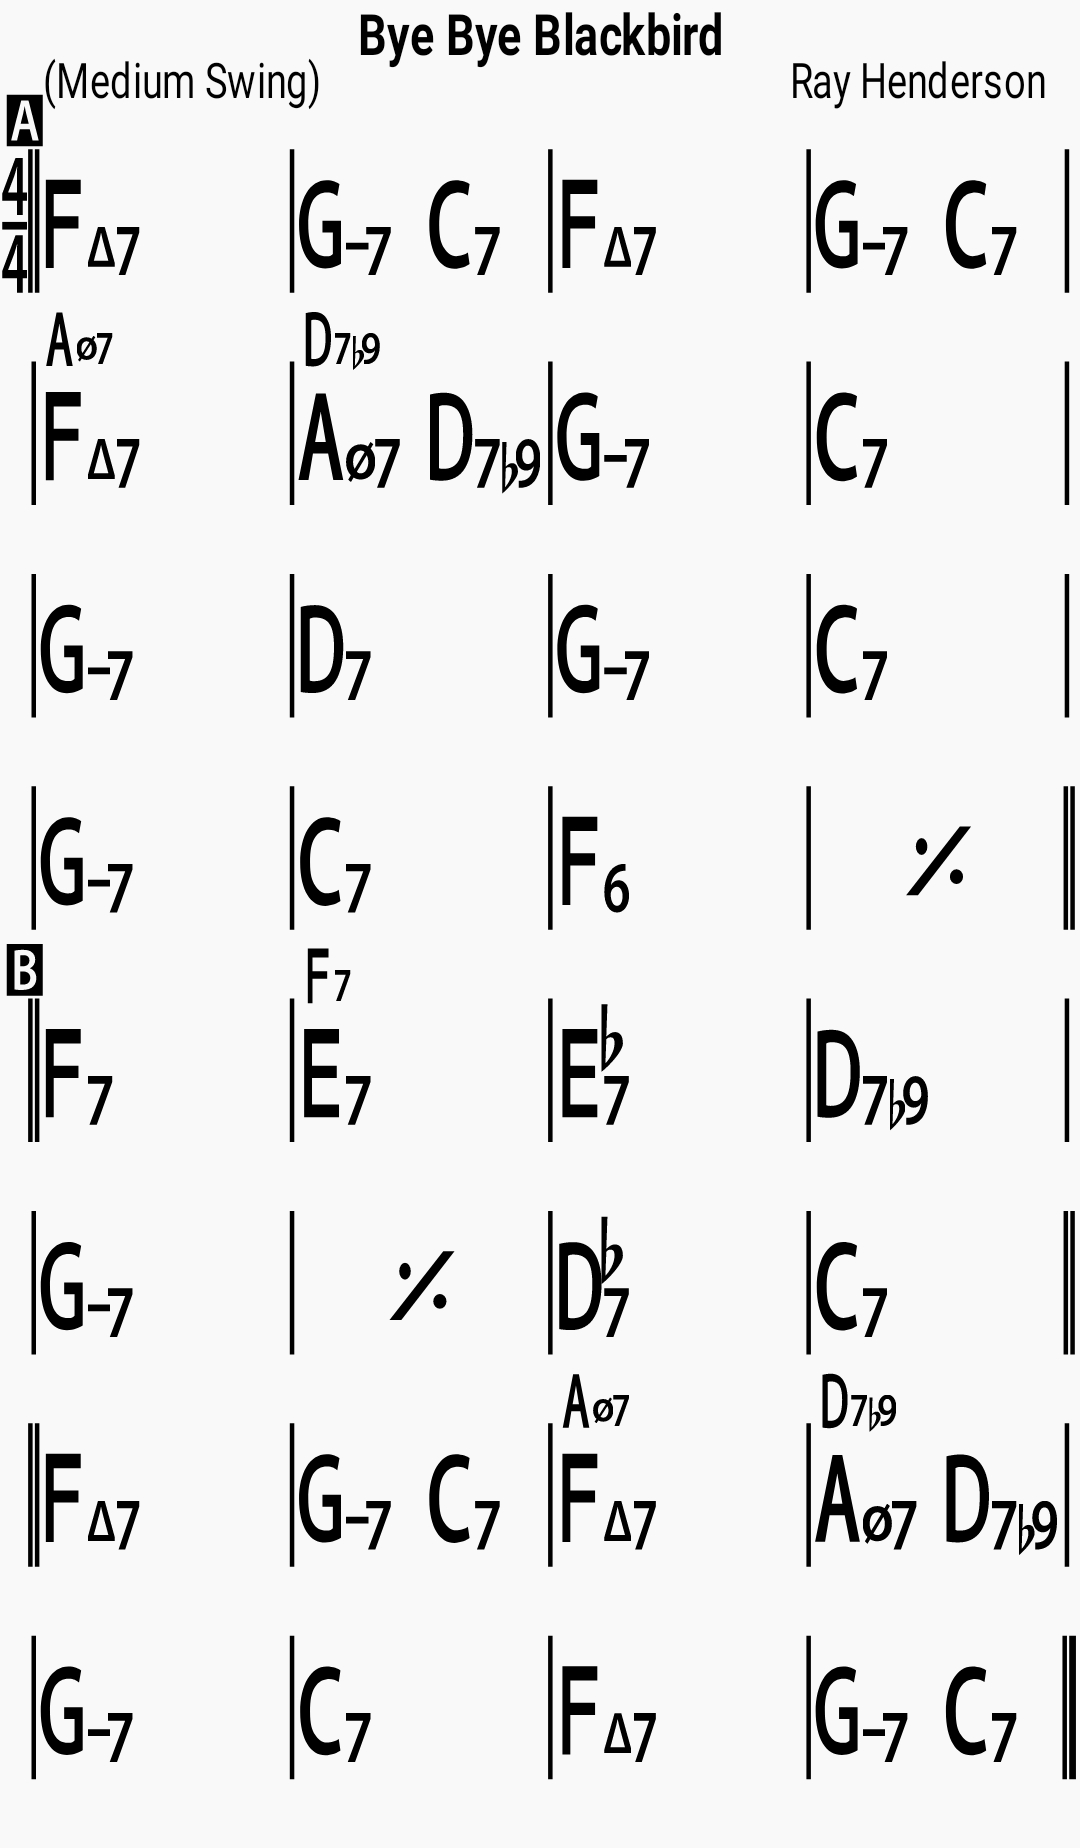 Chord chart for the jazz standard Bye Bye Blackbird